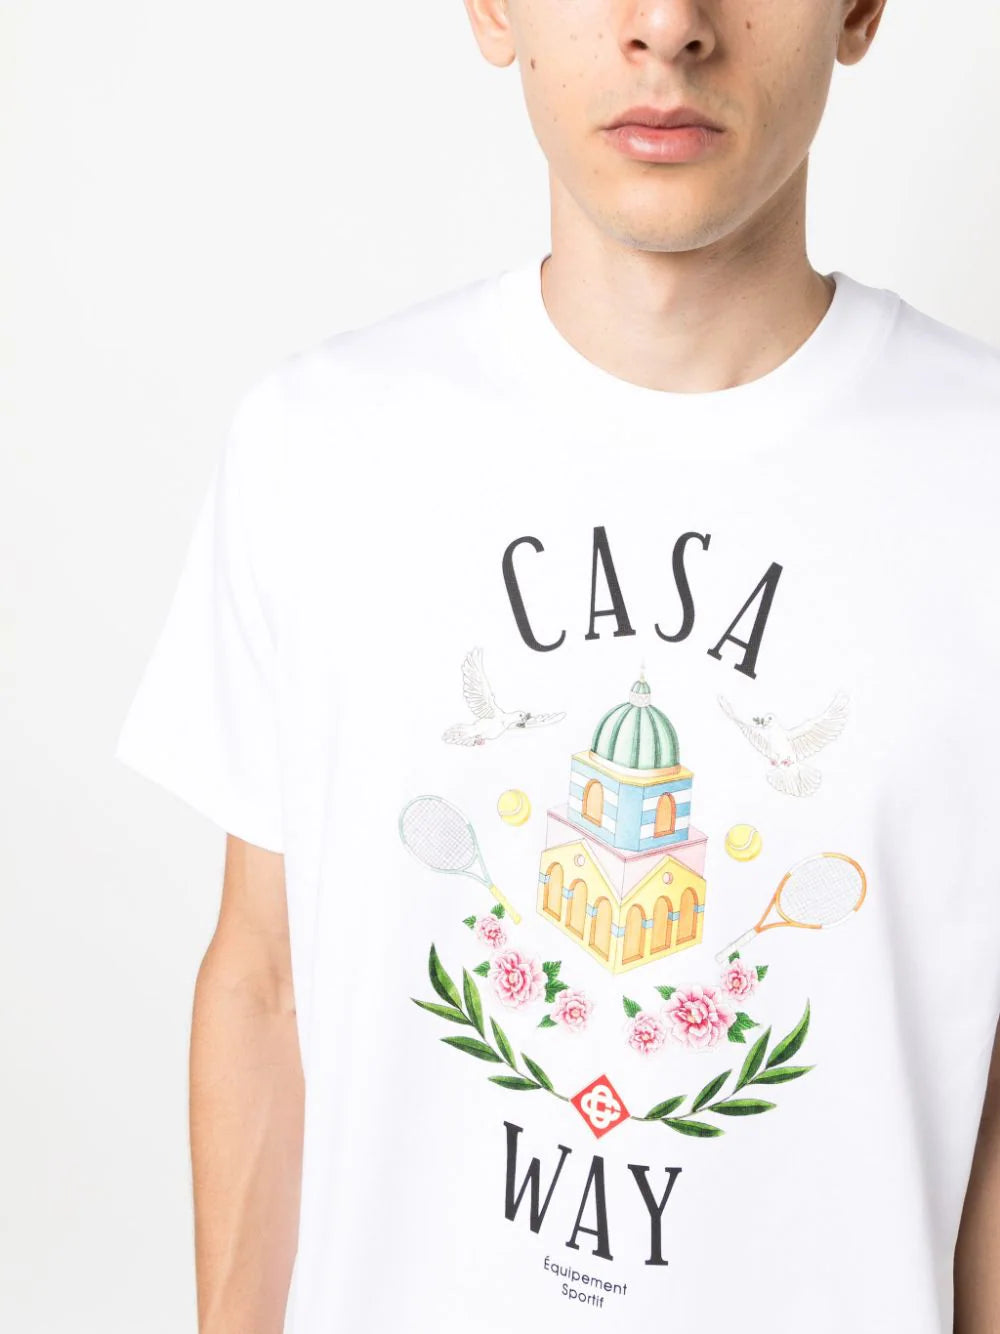 Casablanca Casa Way Organic Cotton T-Shirt in White